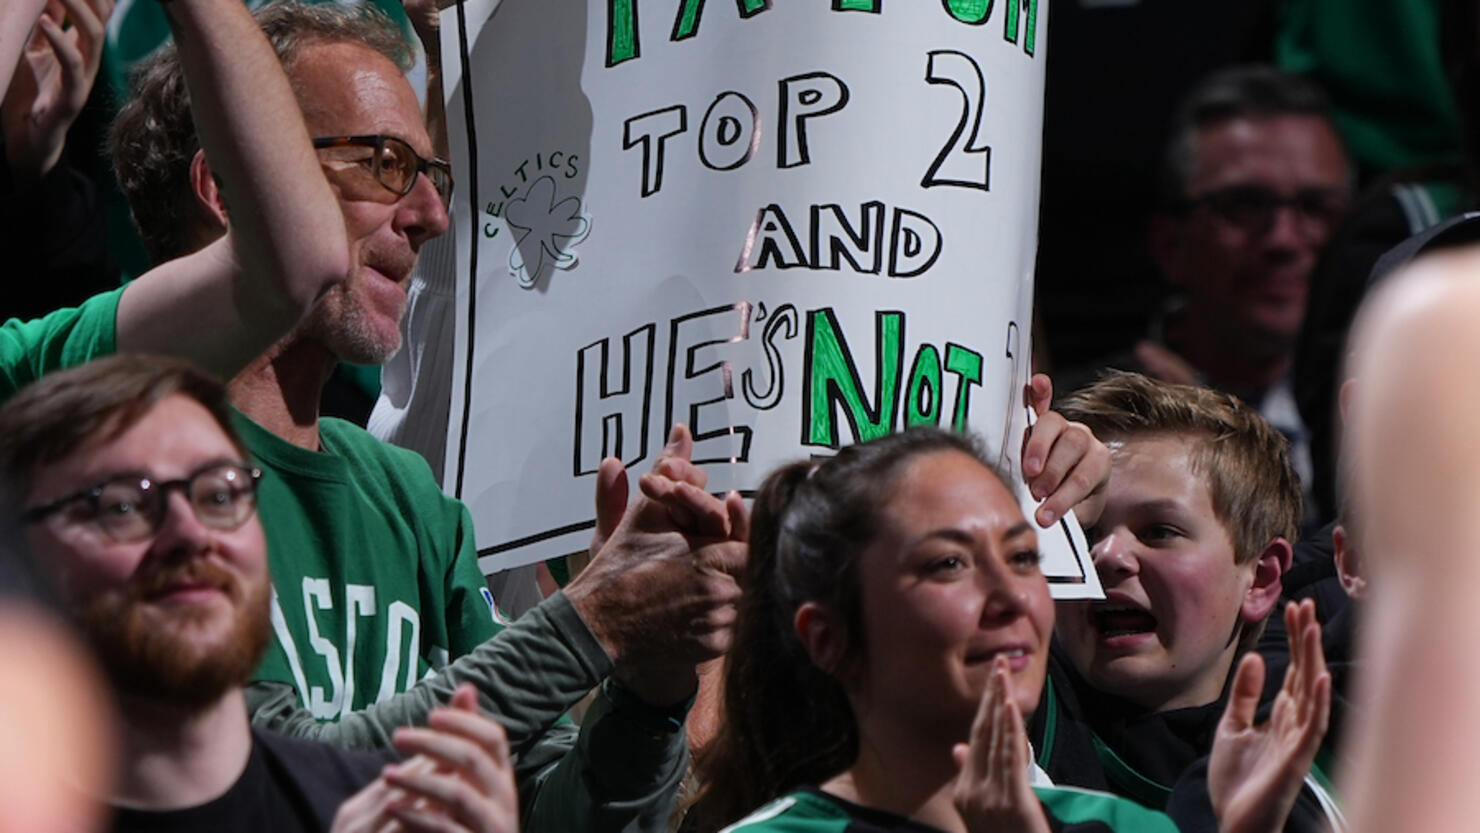 Boston Celtics v Denver Nuggets